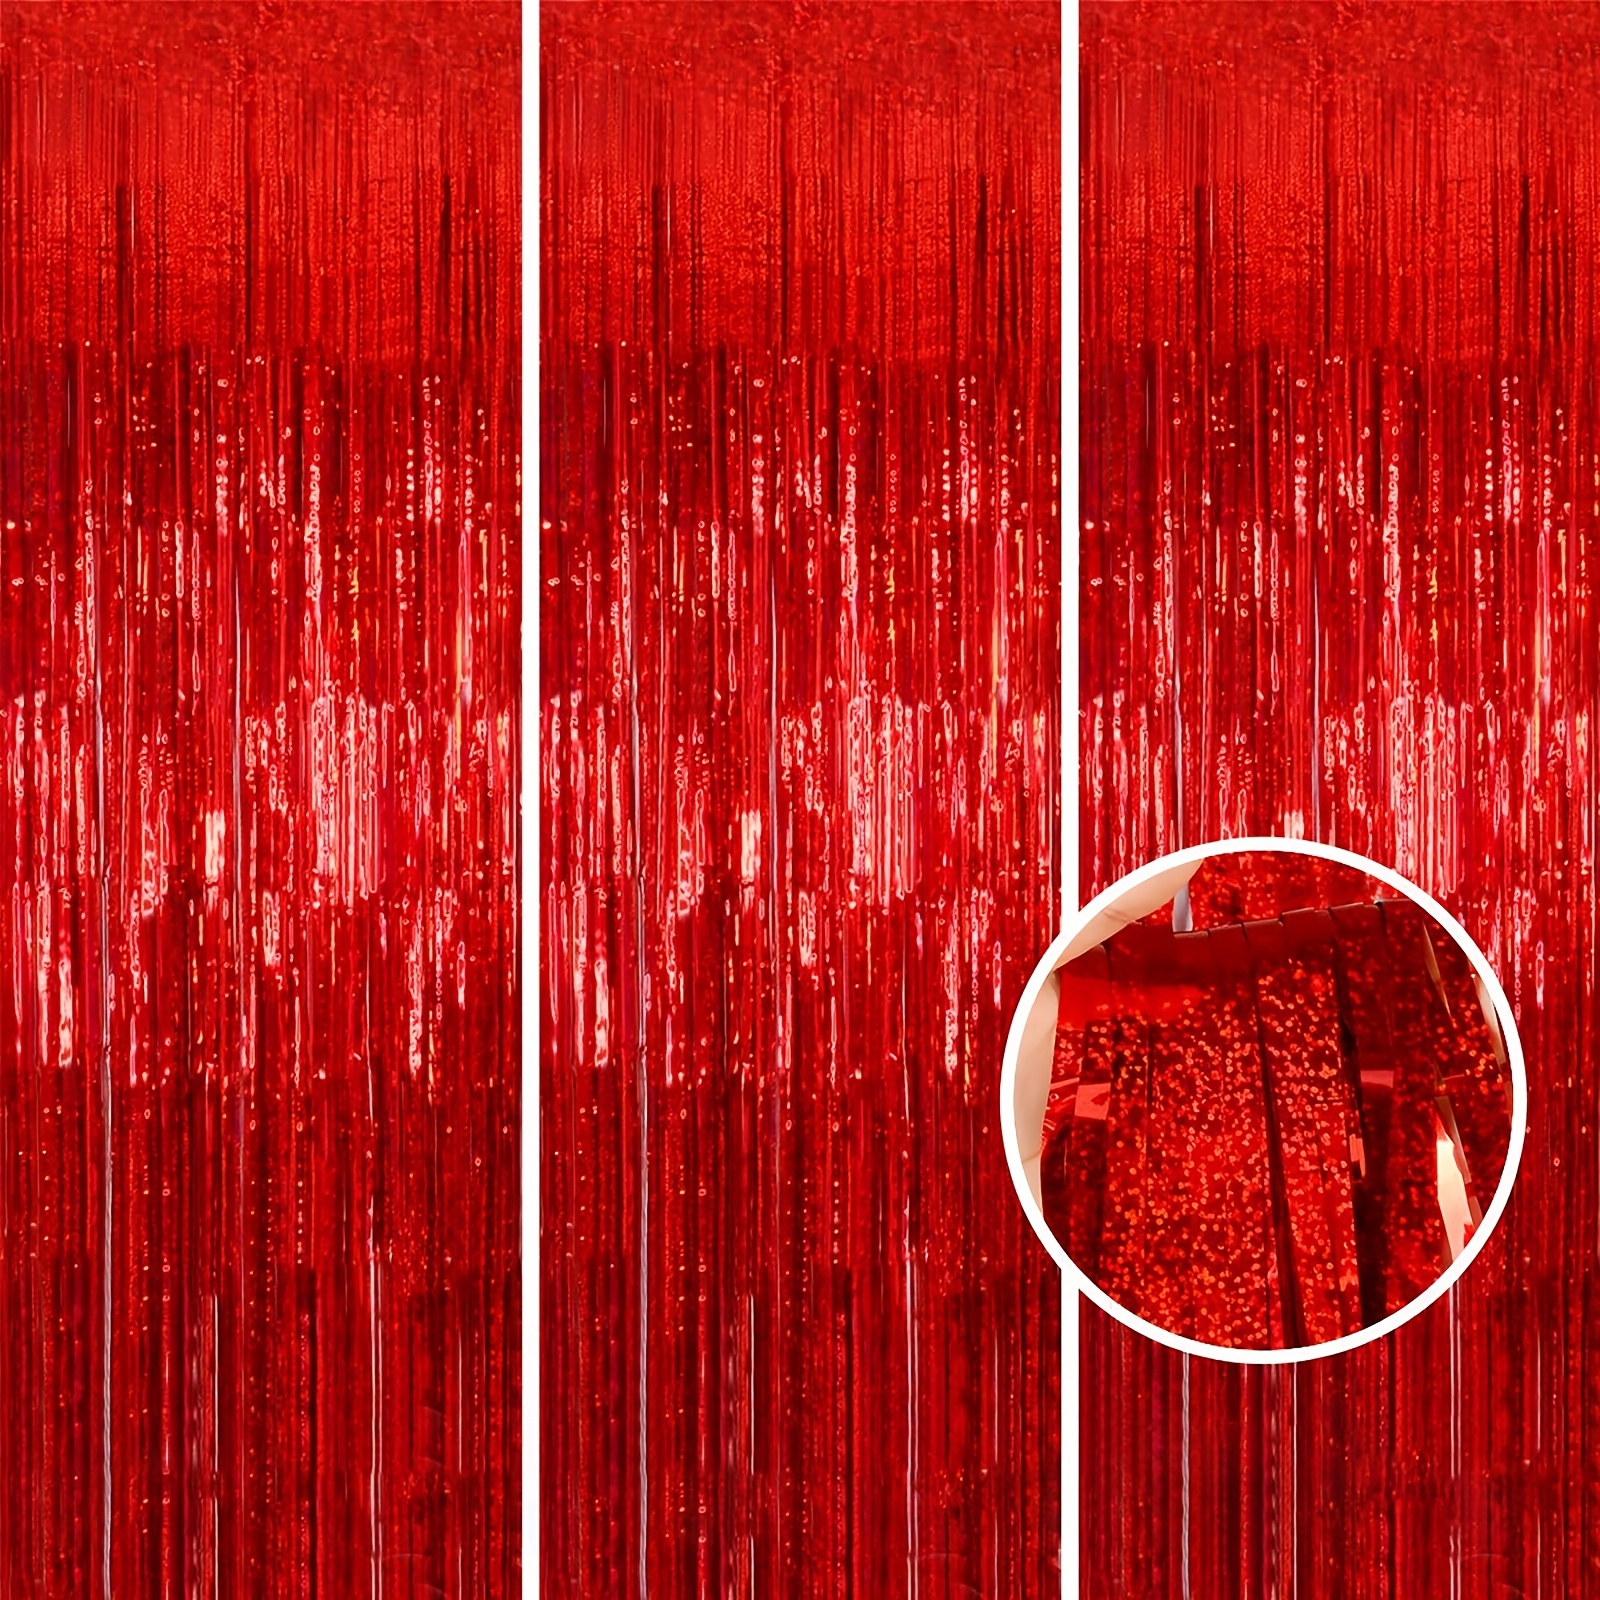 Red Streamers for Fringe Backdrops